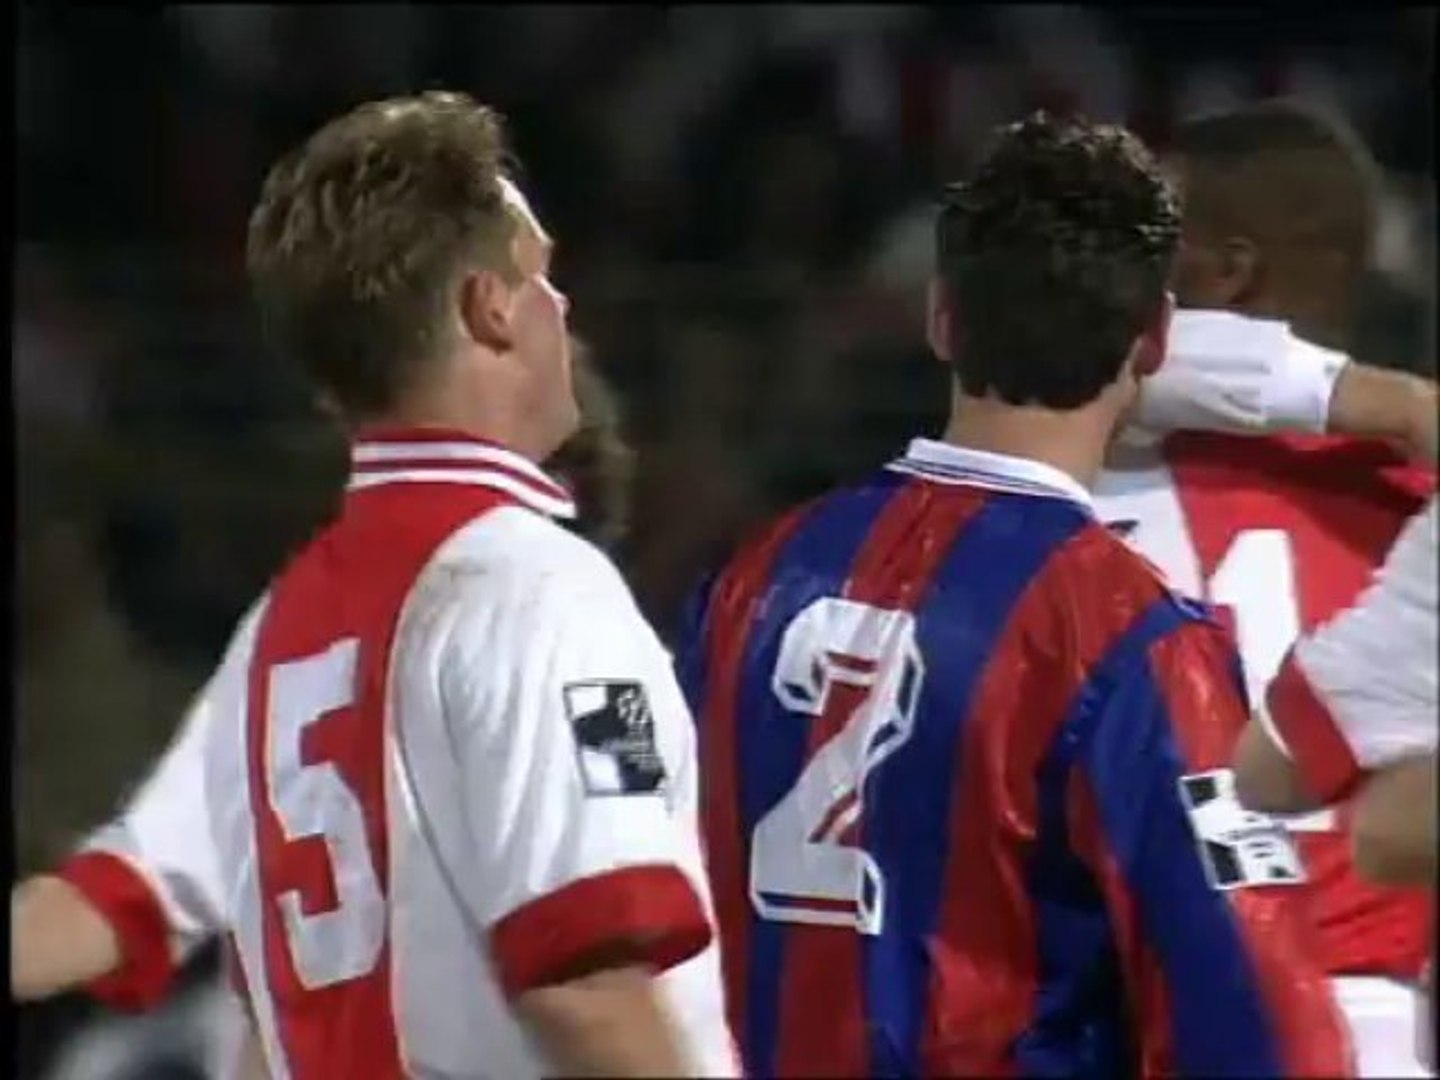 European Scenes on X: Ajax vs. Hajduk Split at Olympisch Stadion  Amsterdam. Champions League 1994-1995  / X